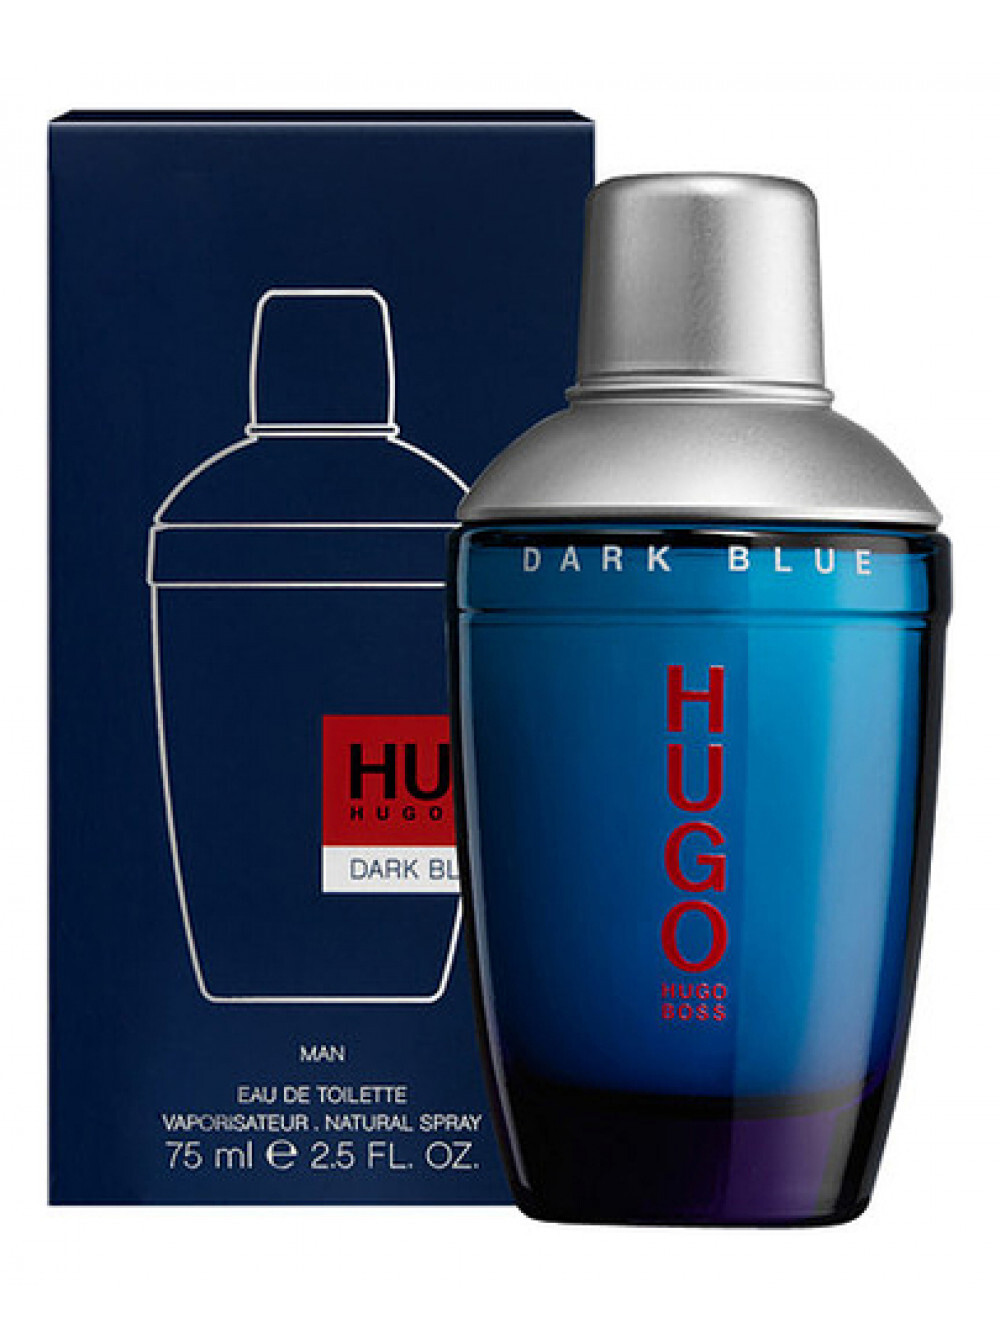 Парфюм мужской hugo. Hugo Boss Dark Blue 75ml. Boss Hugo Dark Blue men 75ml. Boss Hugo Boss Eau de Toilette. Туалетная вода Hugo Boss Hugo Dark Blue.